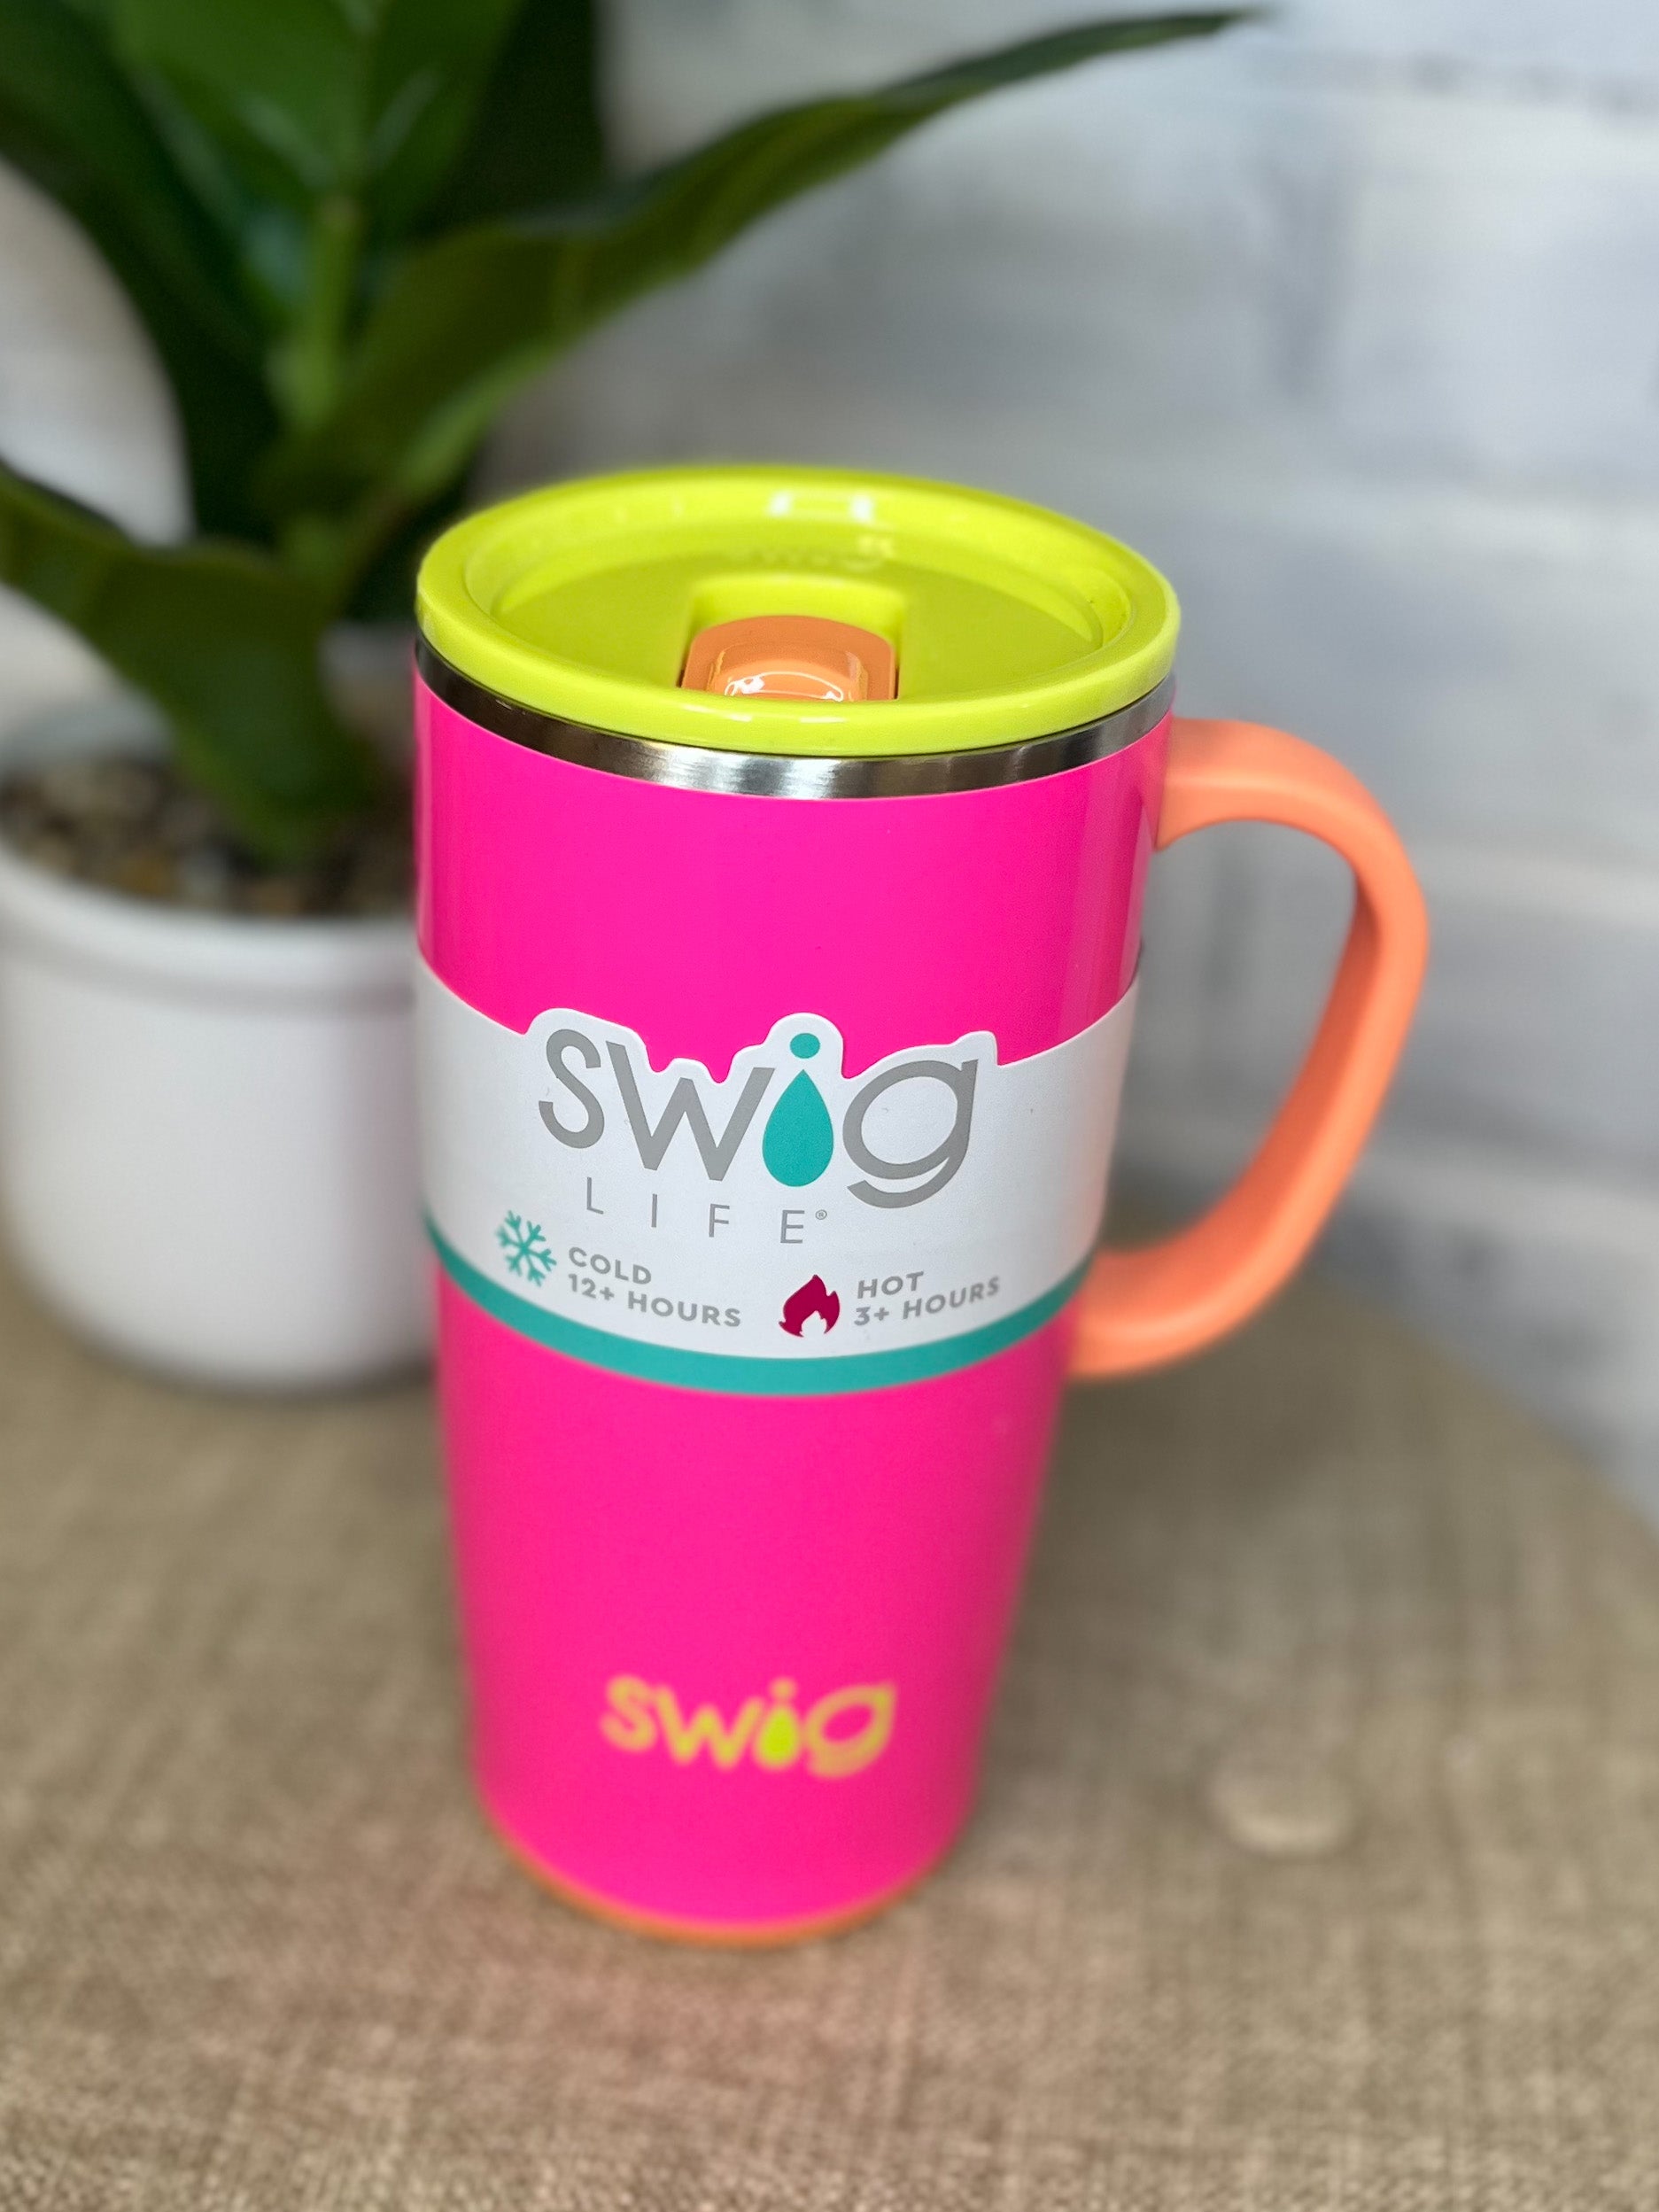 Swig 22 oz Travel Mug